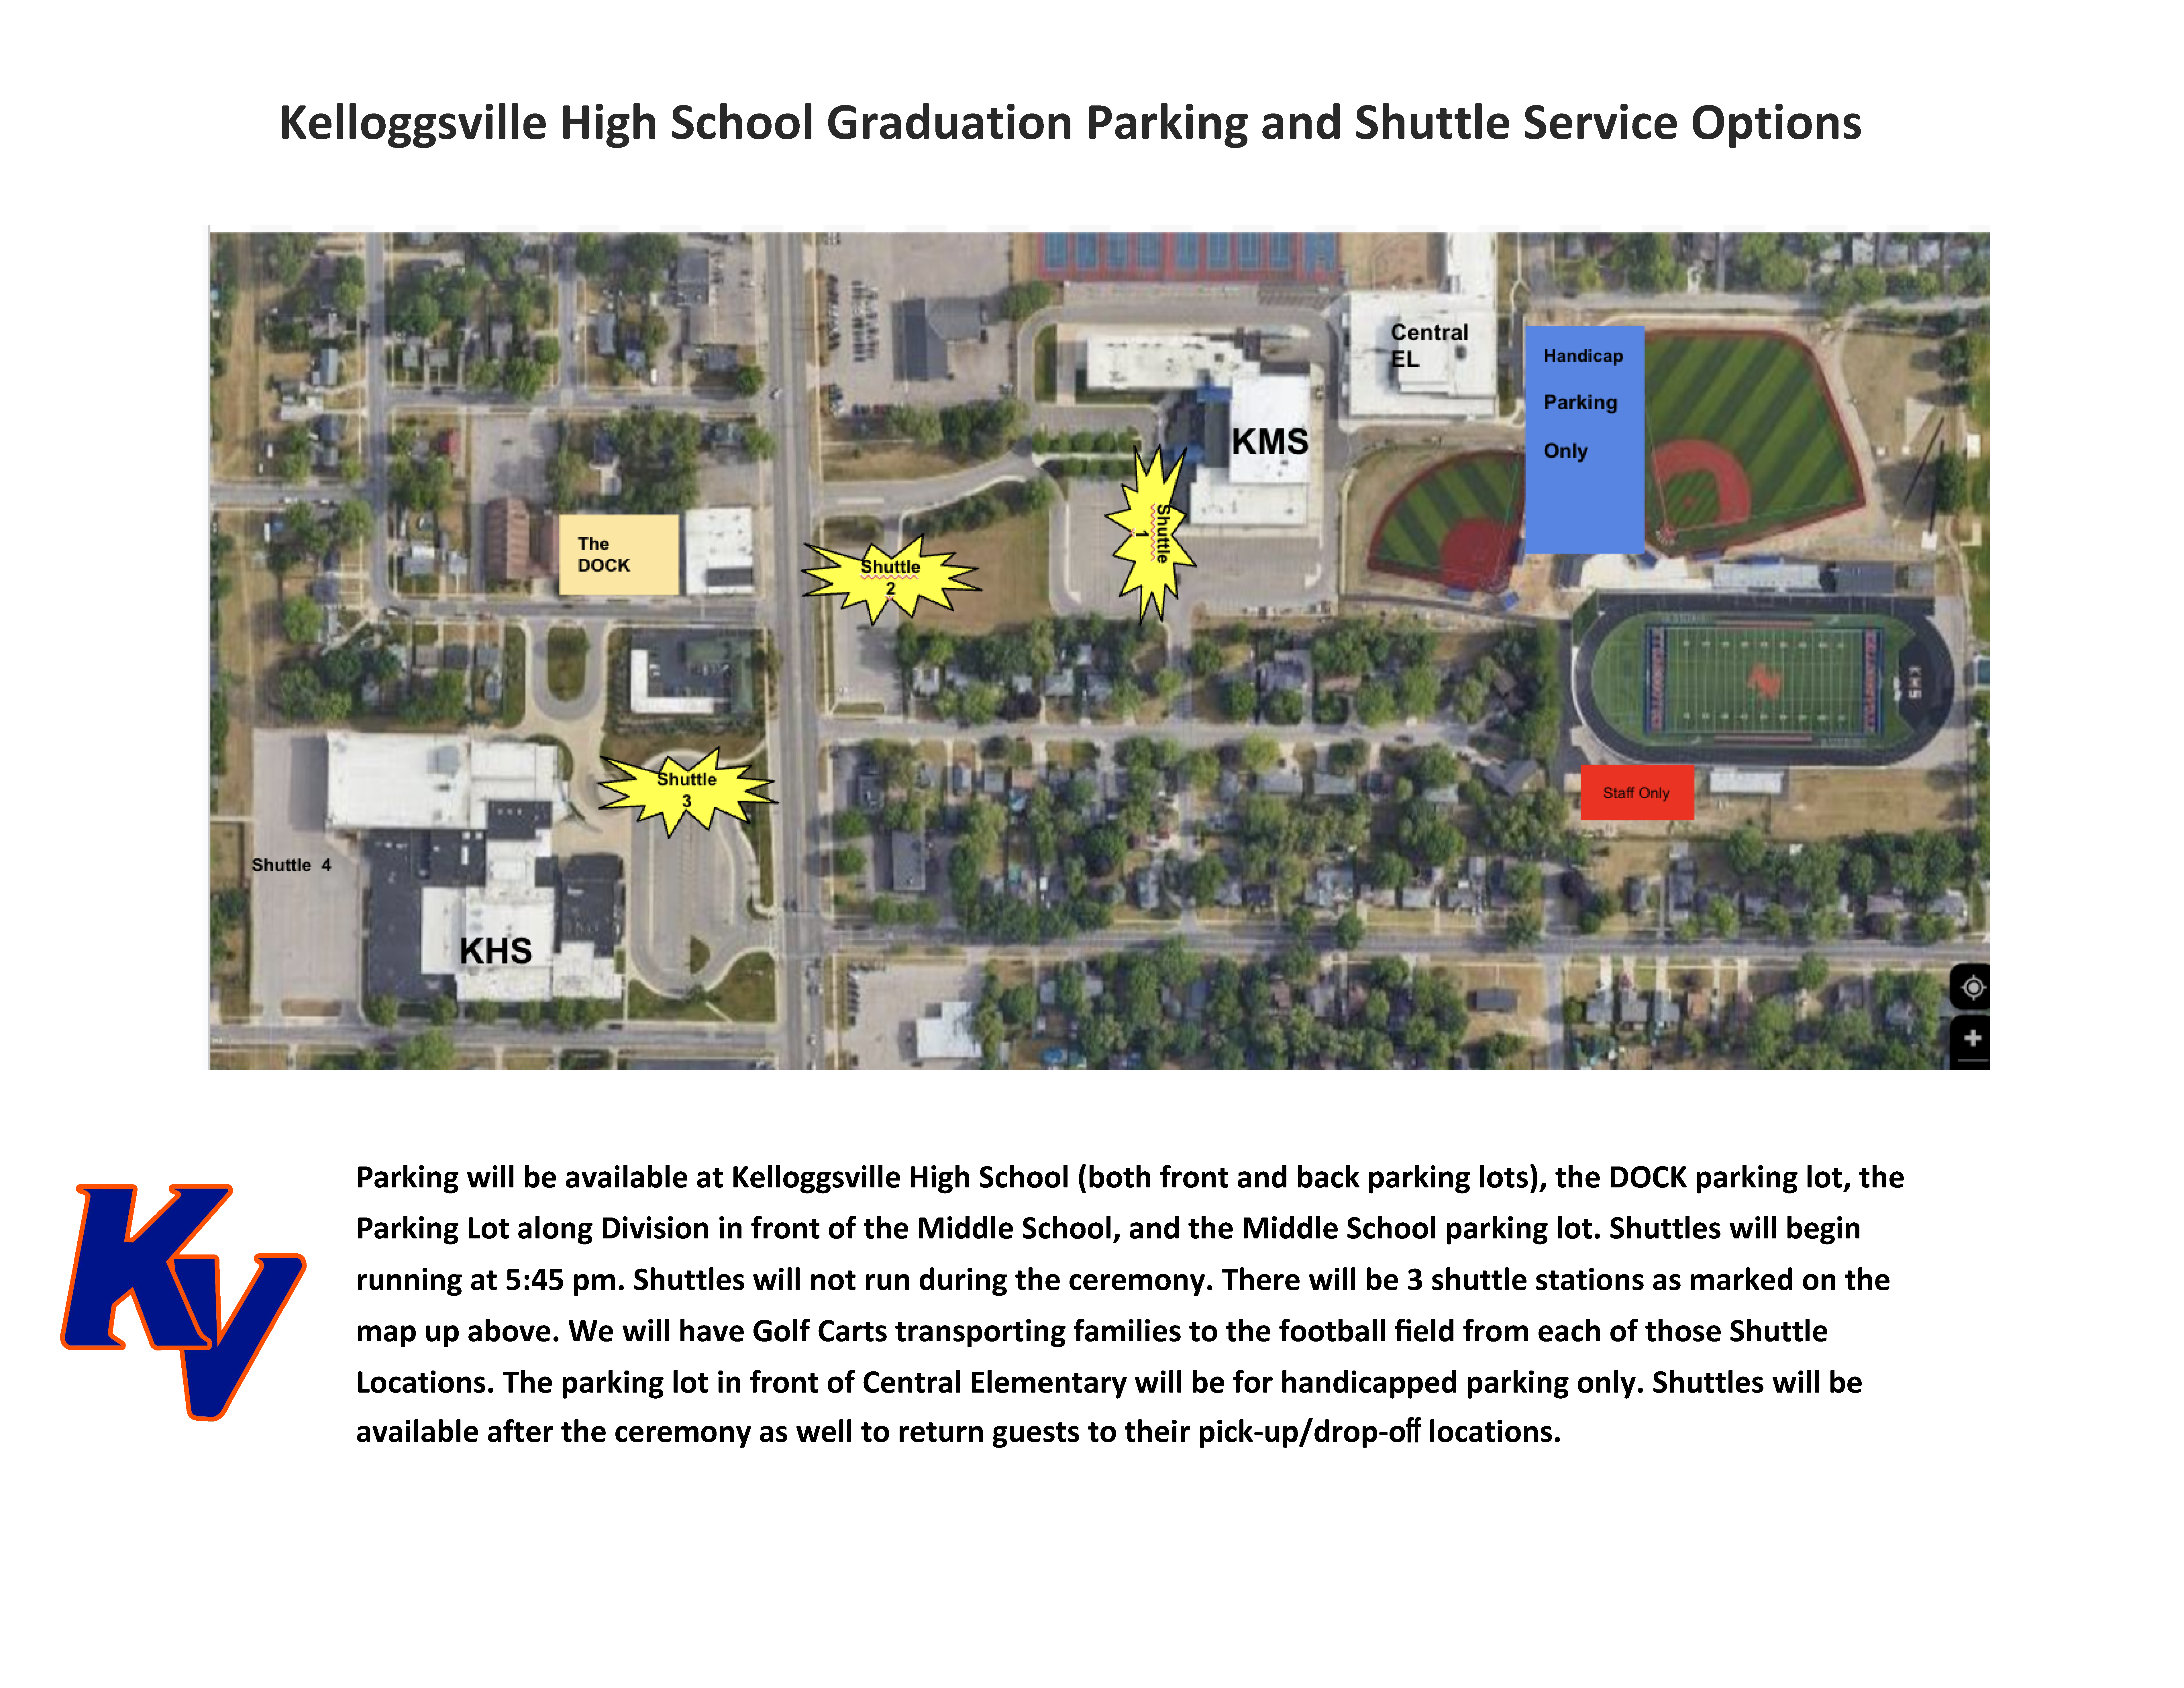 Map of Kelloggsville High School graduation parking